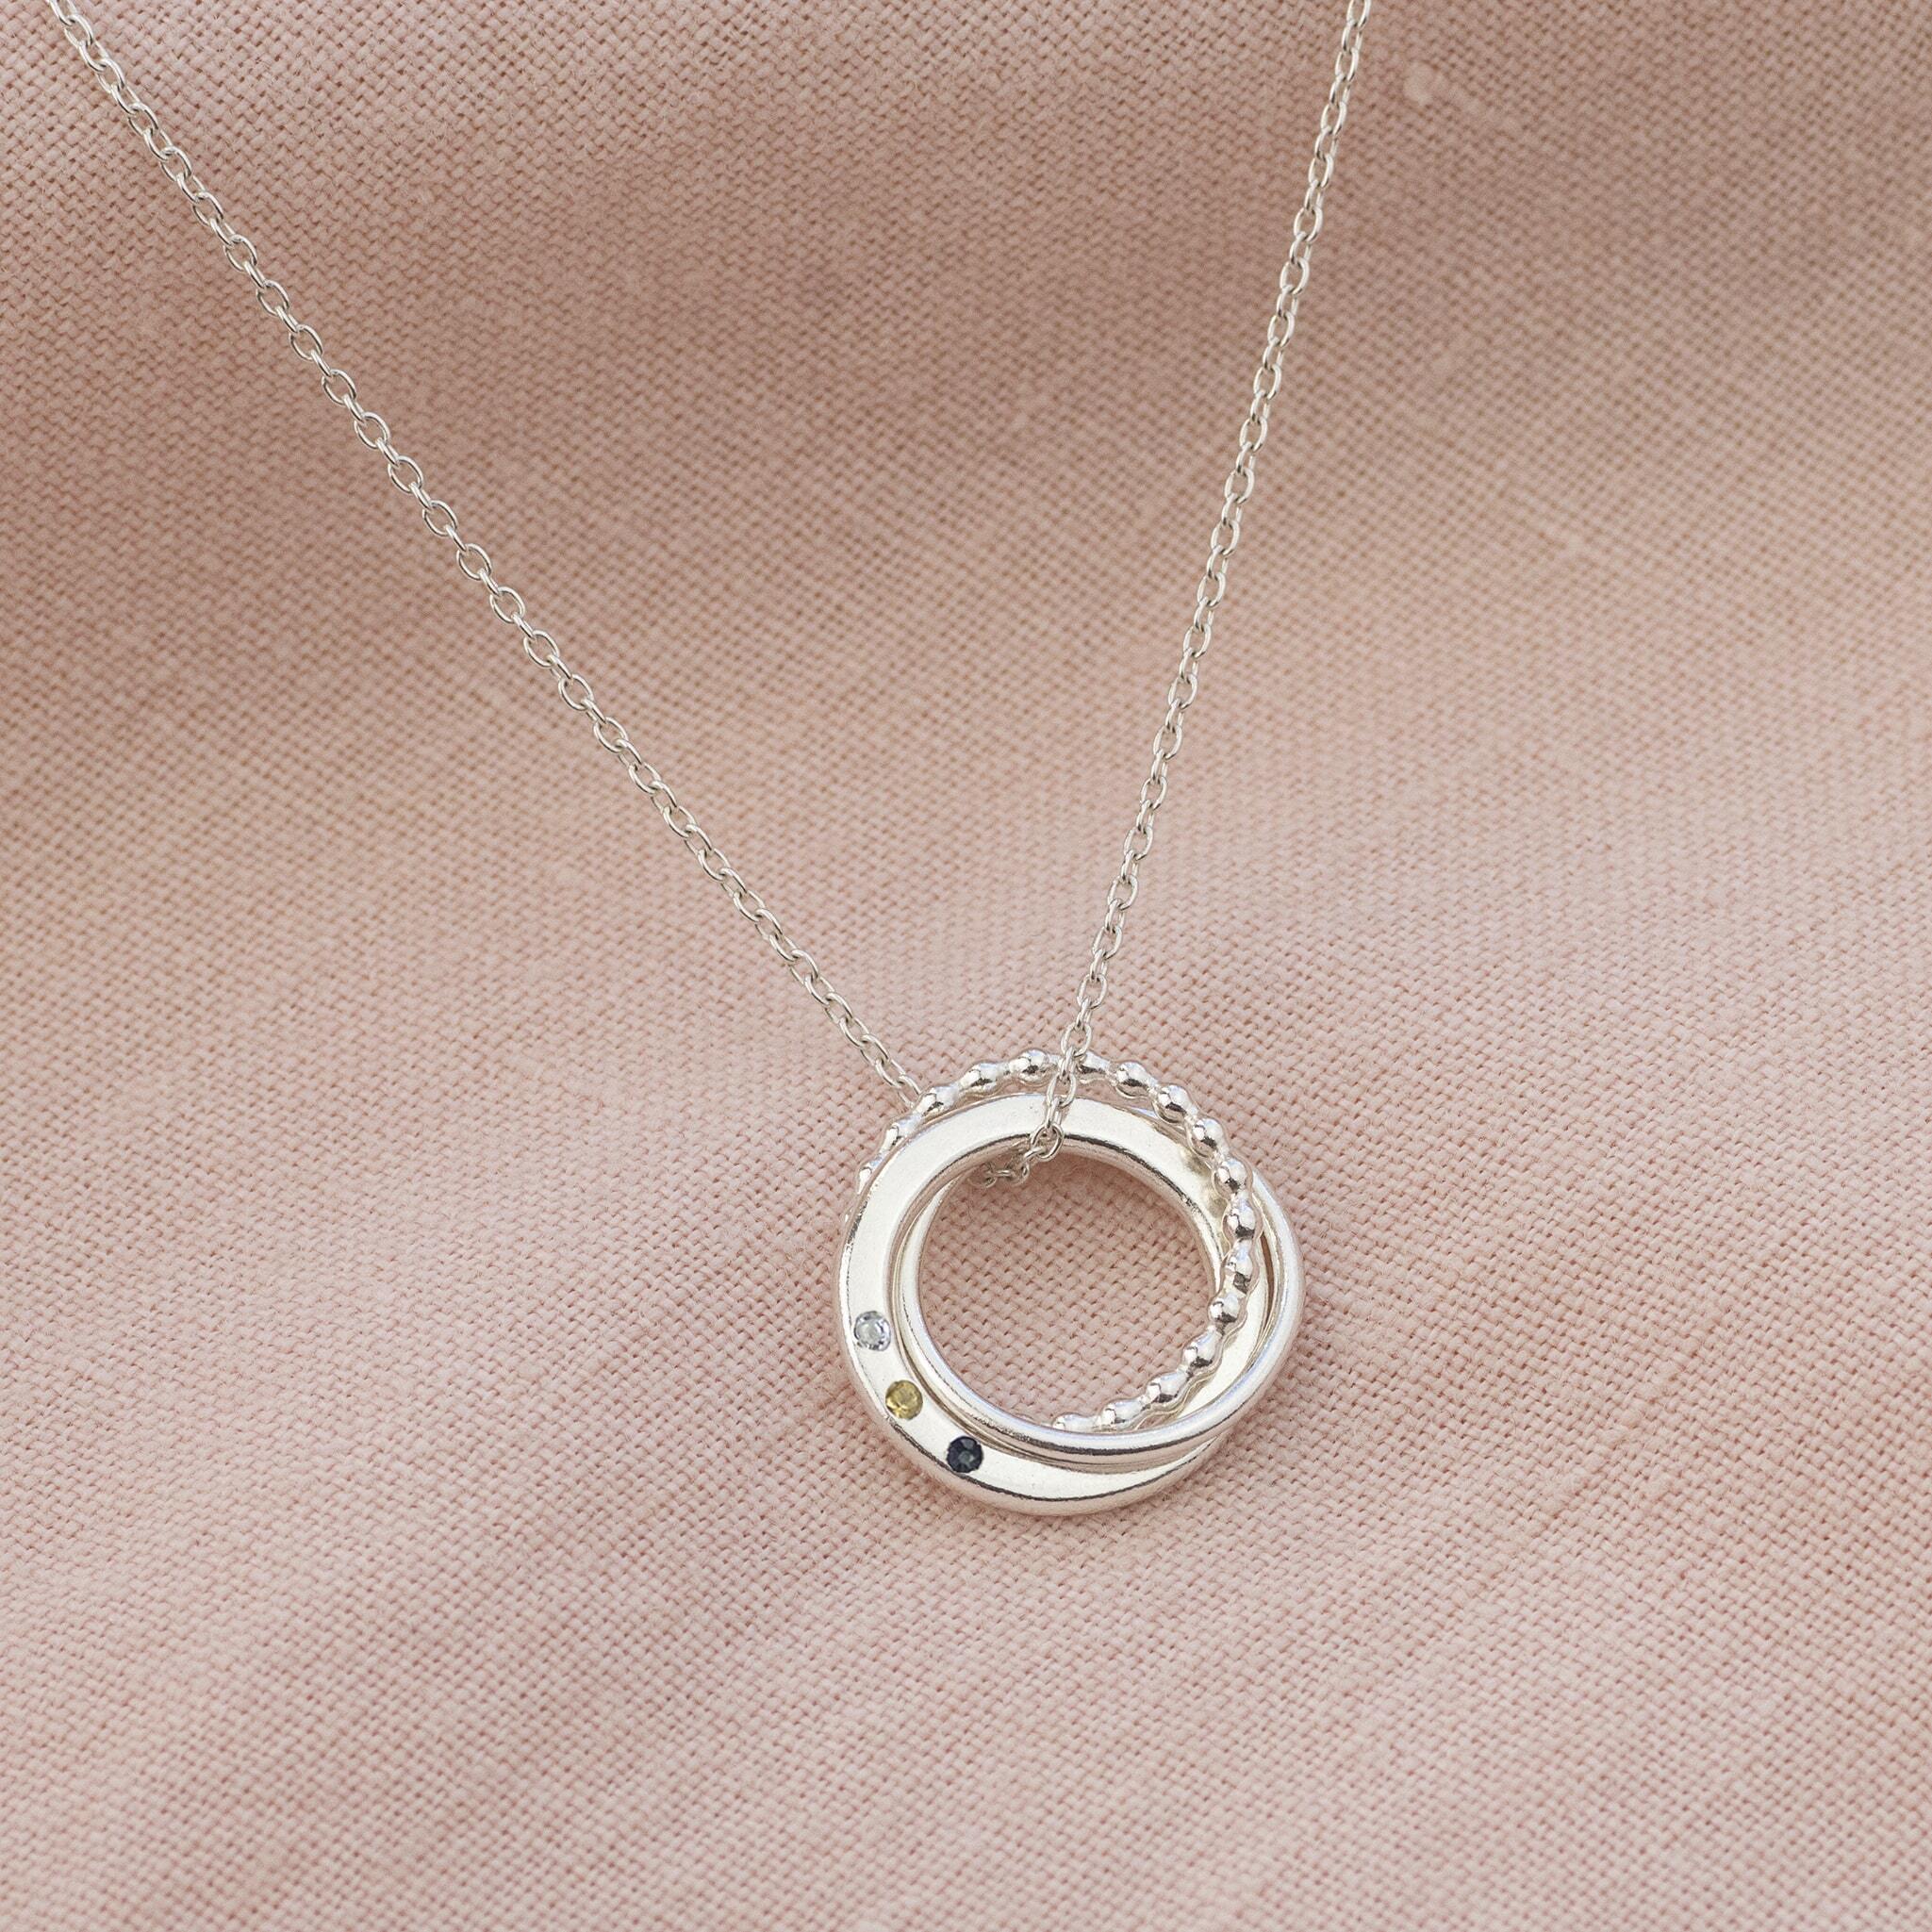 Mini birthstone necklace silver – ΔRGENT SILVERSMITH